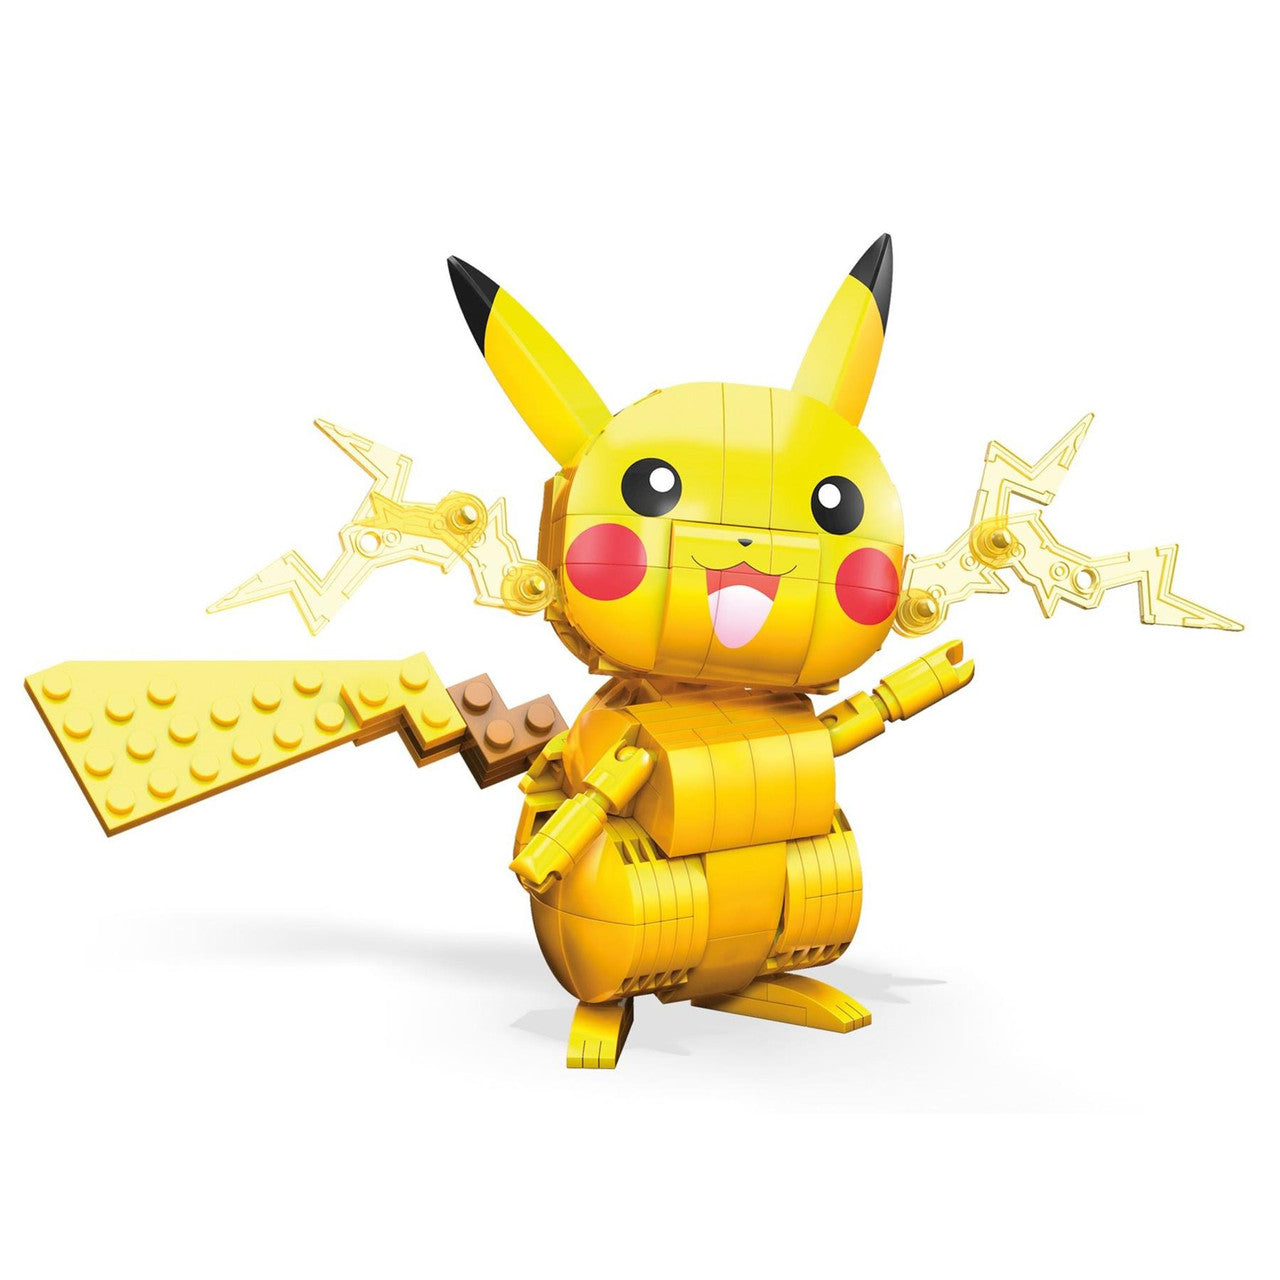 Mega Construx - Pokemon Pikachu - Loaded Dice Barry Vale of Glamorgan CF64 3HD